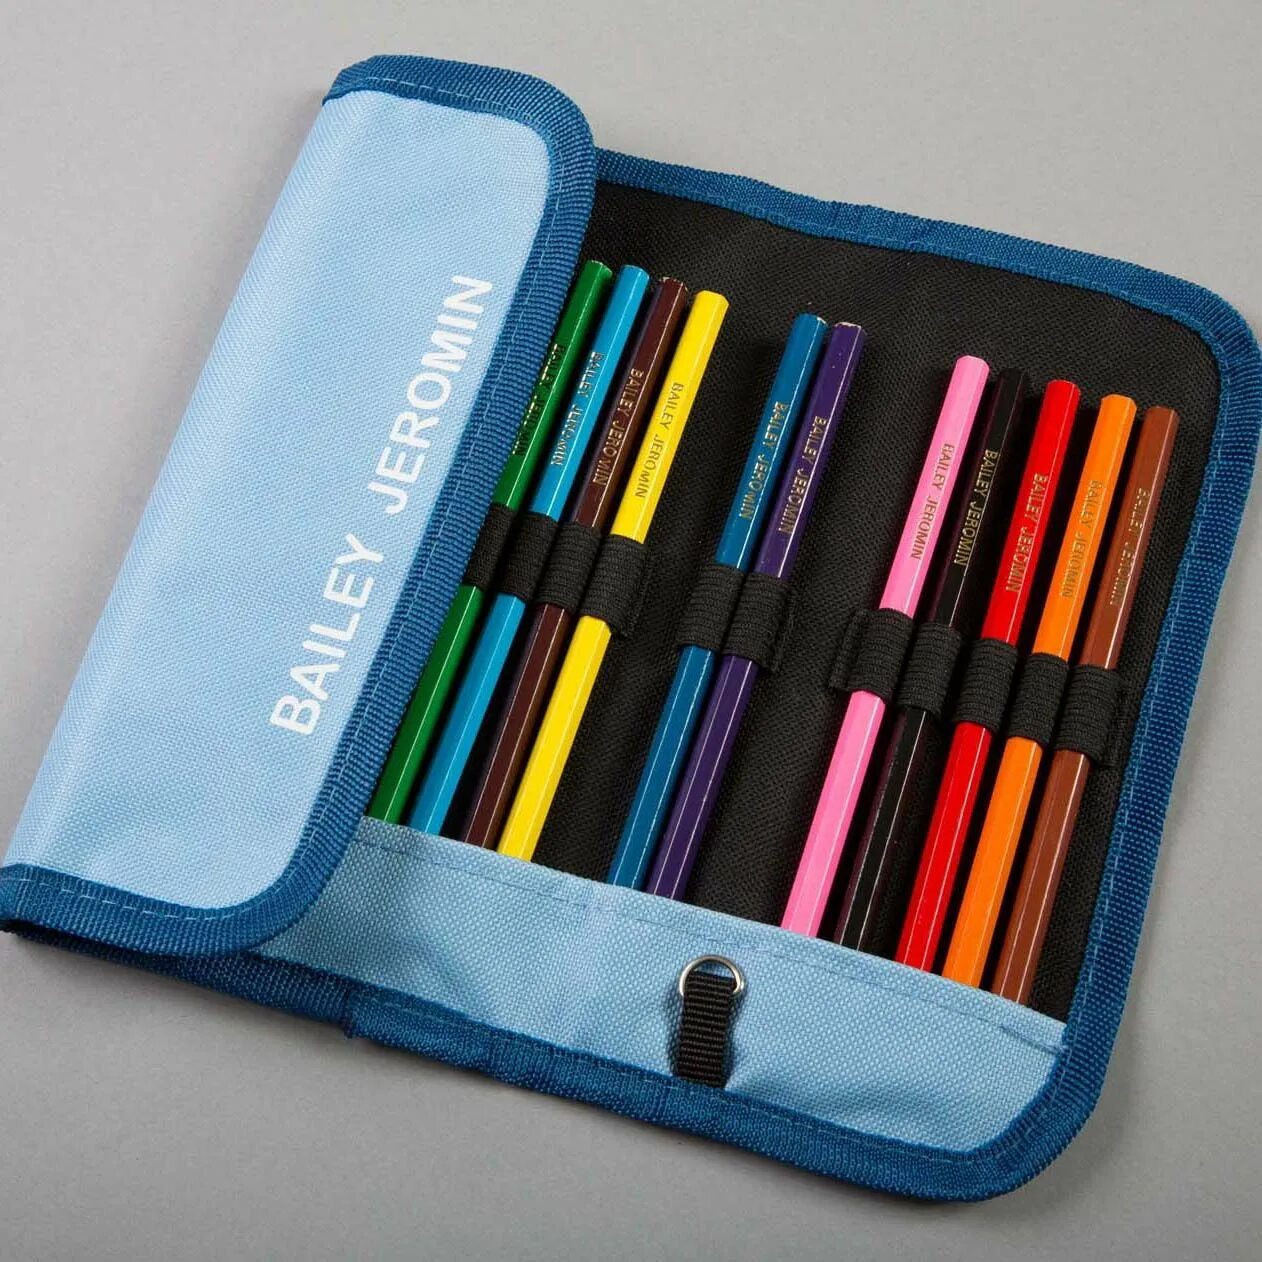 4 pencils cases. Корпусный пенал Pencil Case. Pencil Case для планшета. Velour Pencil Case. An Pencil Case или a Pencil Case.